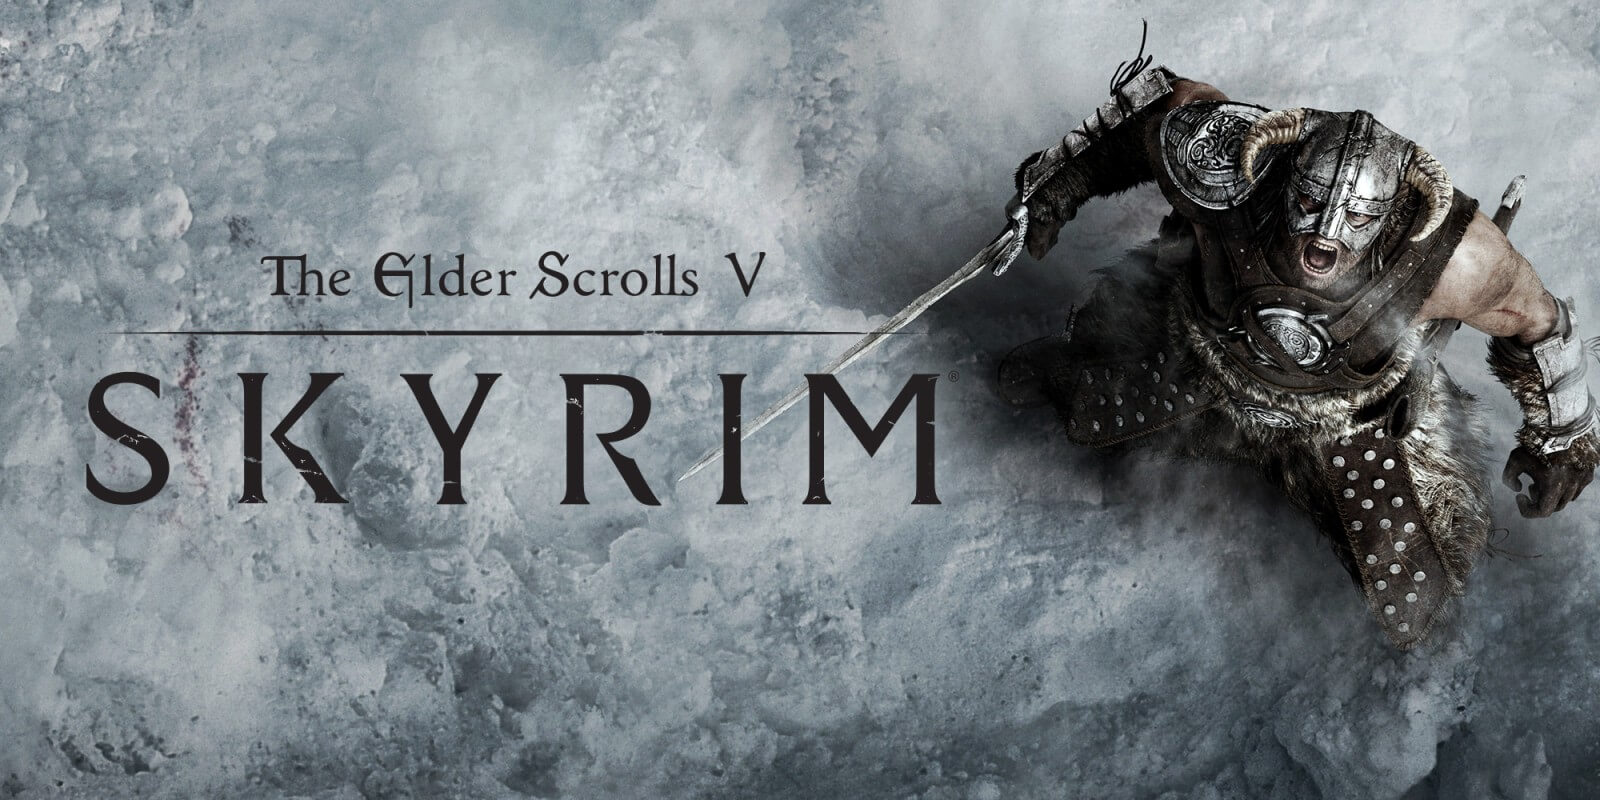 The Elder Scrolls V: Skyrim gets a Dragon Ball Z: Xenoverse 3 Mod